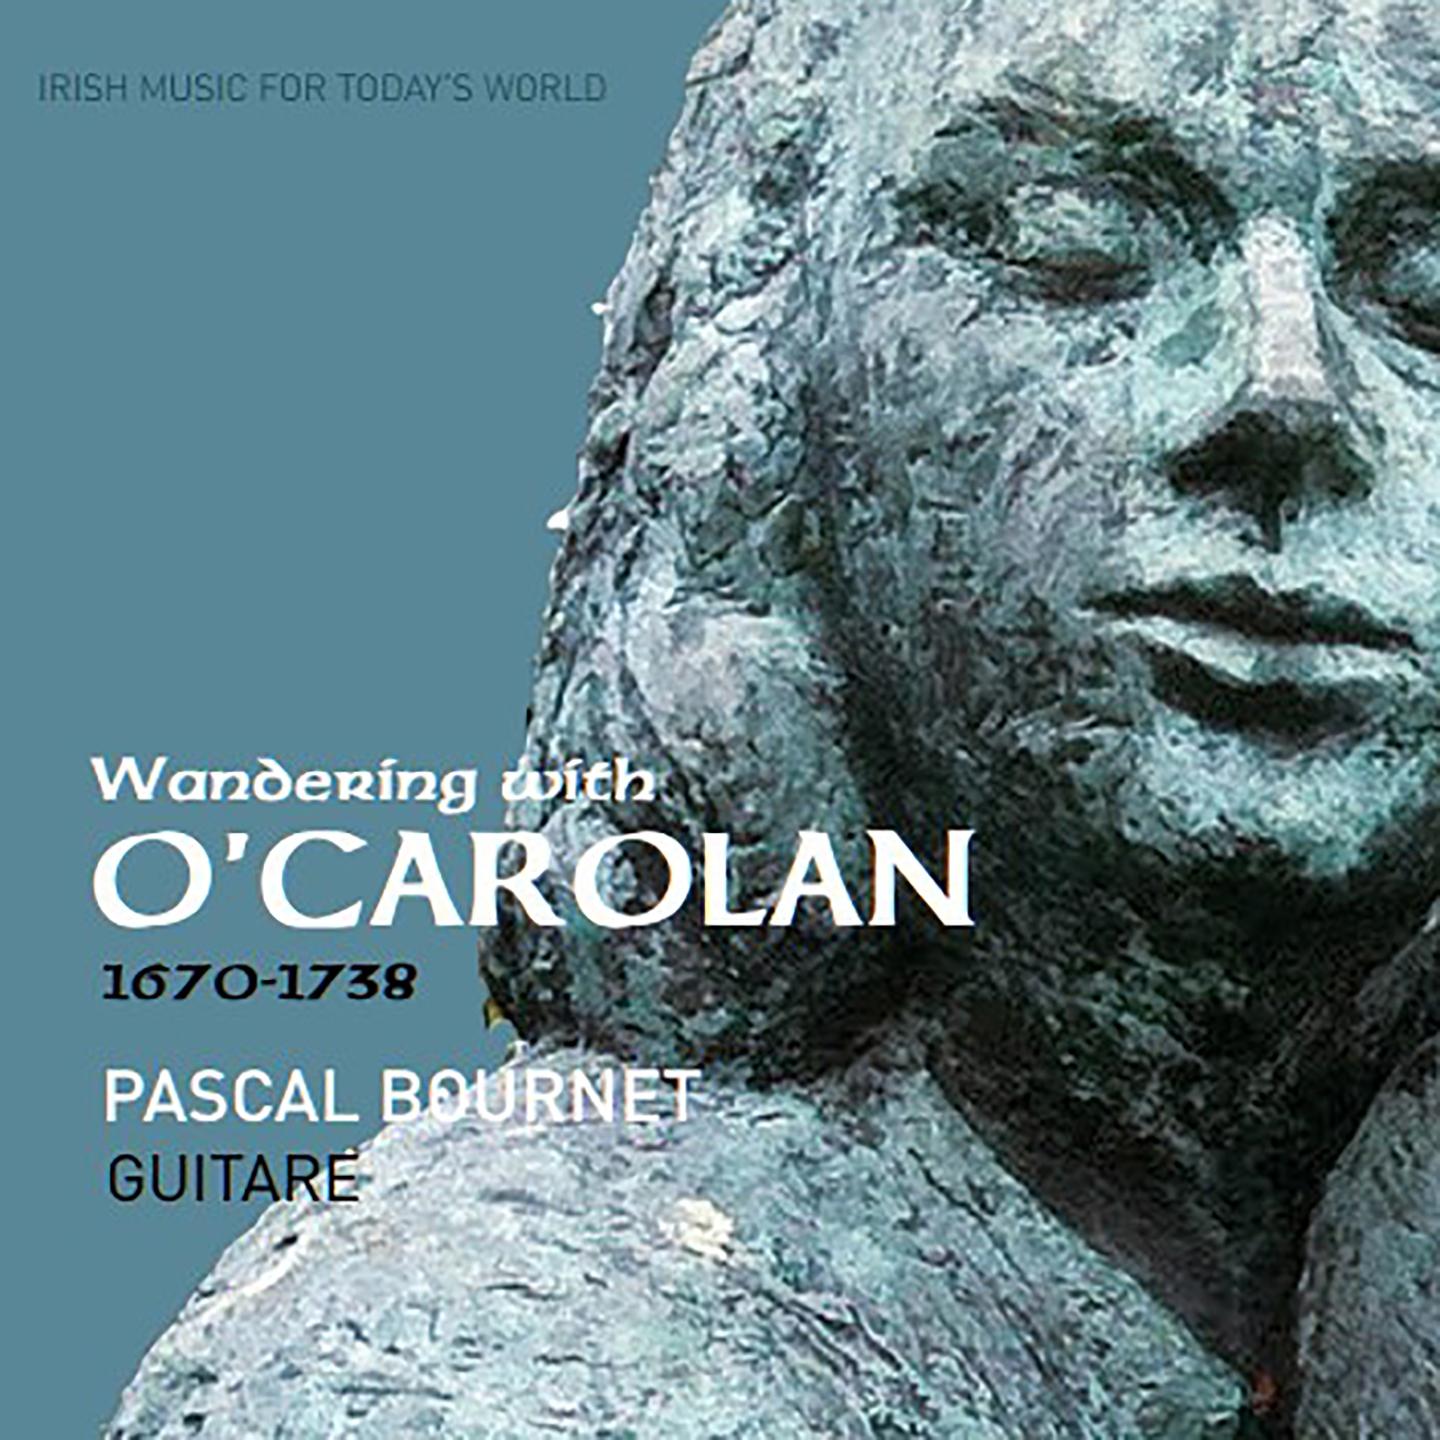 Wandering with O'Carolan (1670-1738 Irish Music for Today's World)